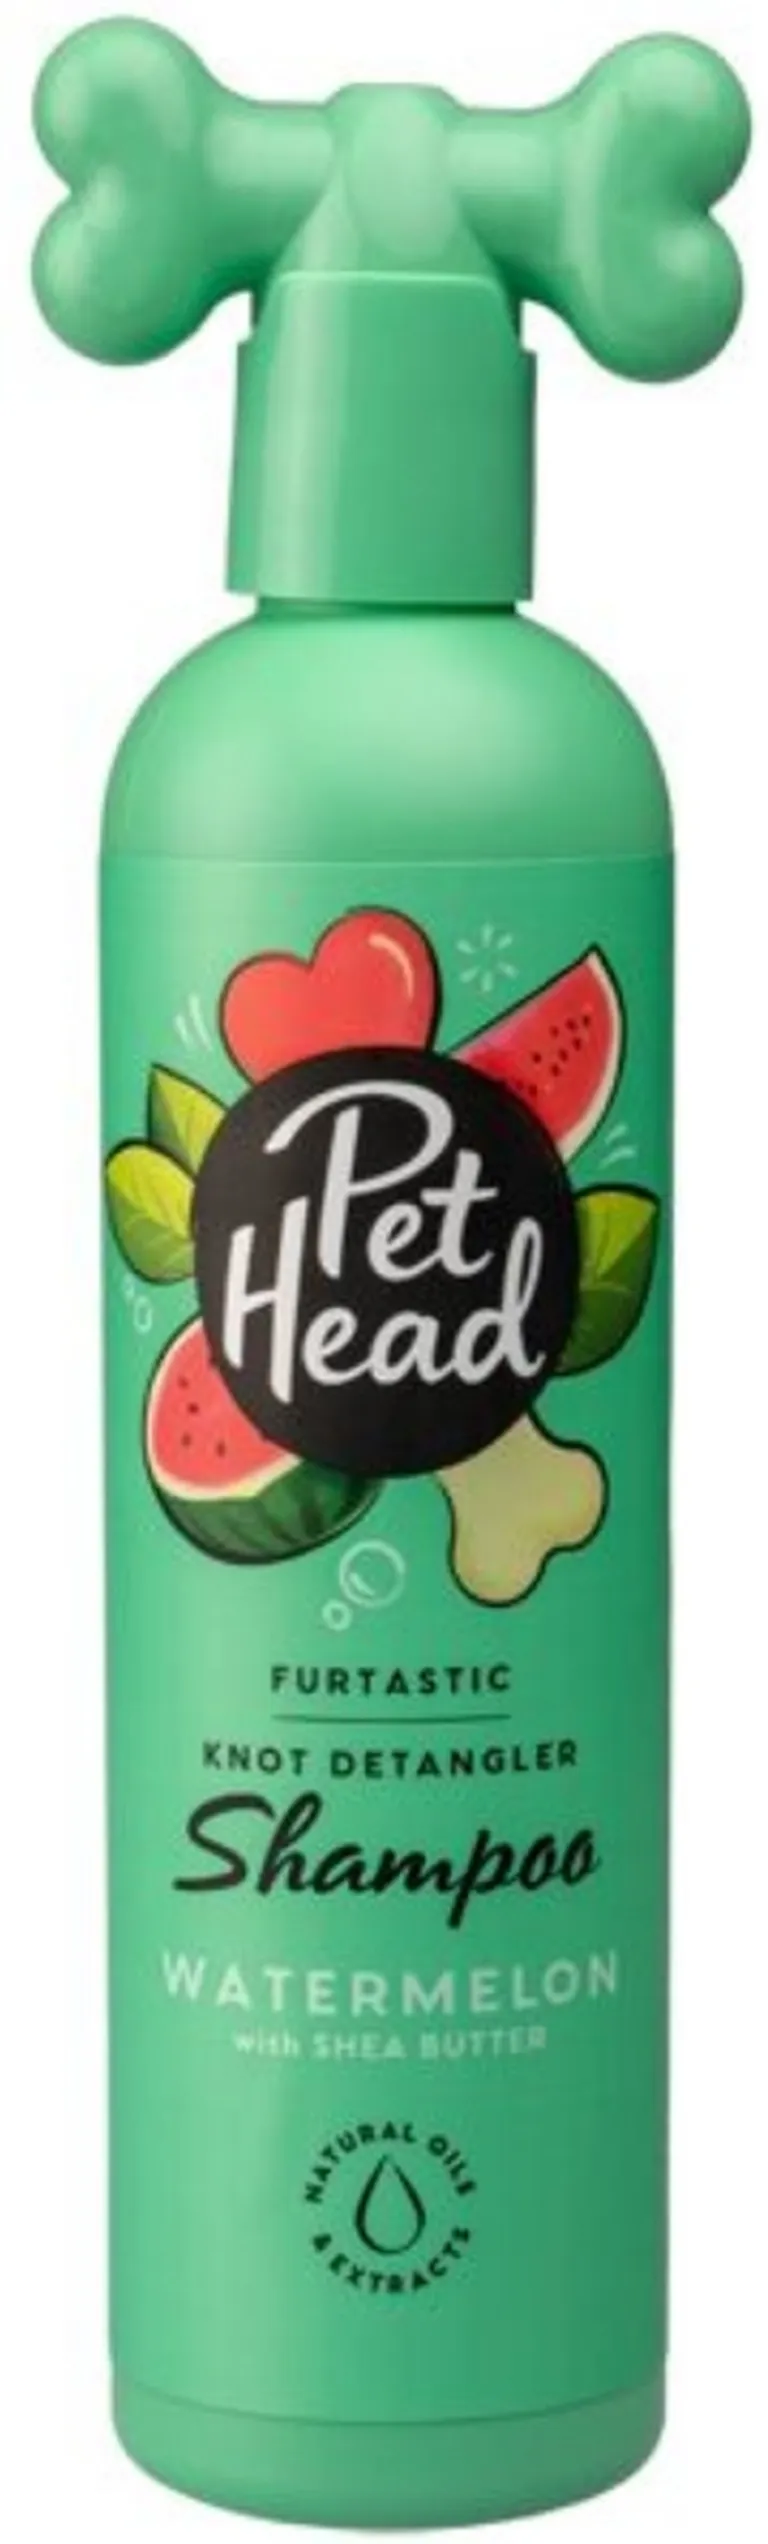 Pet Head Furtastic Knot Detangler Shampoo for Dogs Watermelon with Shea Butter Photo 1